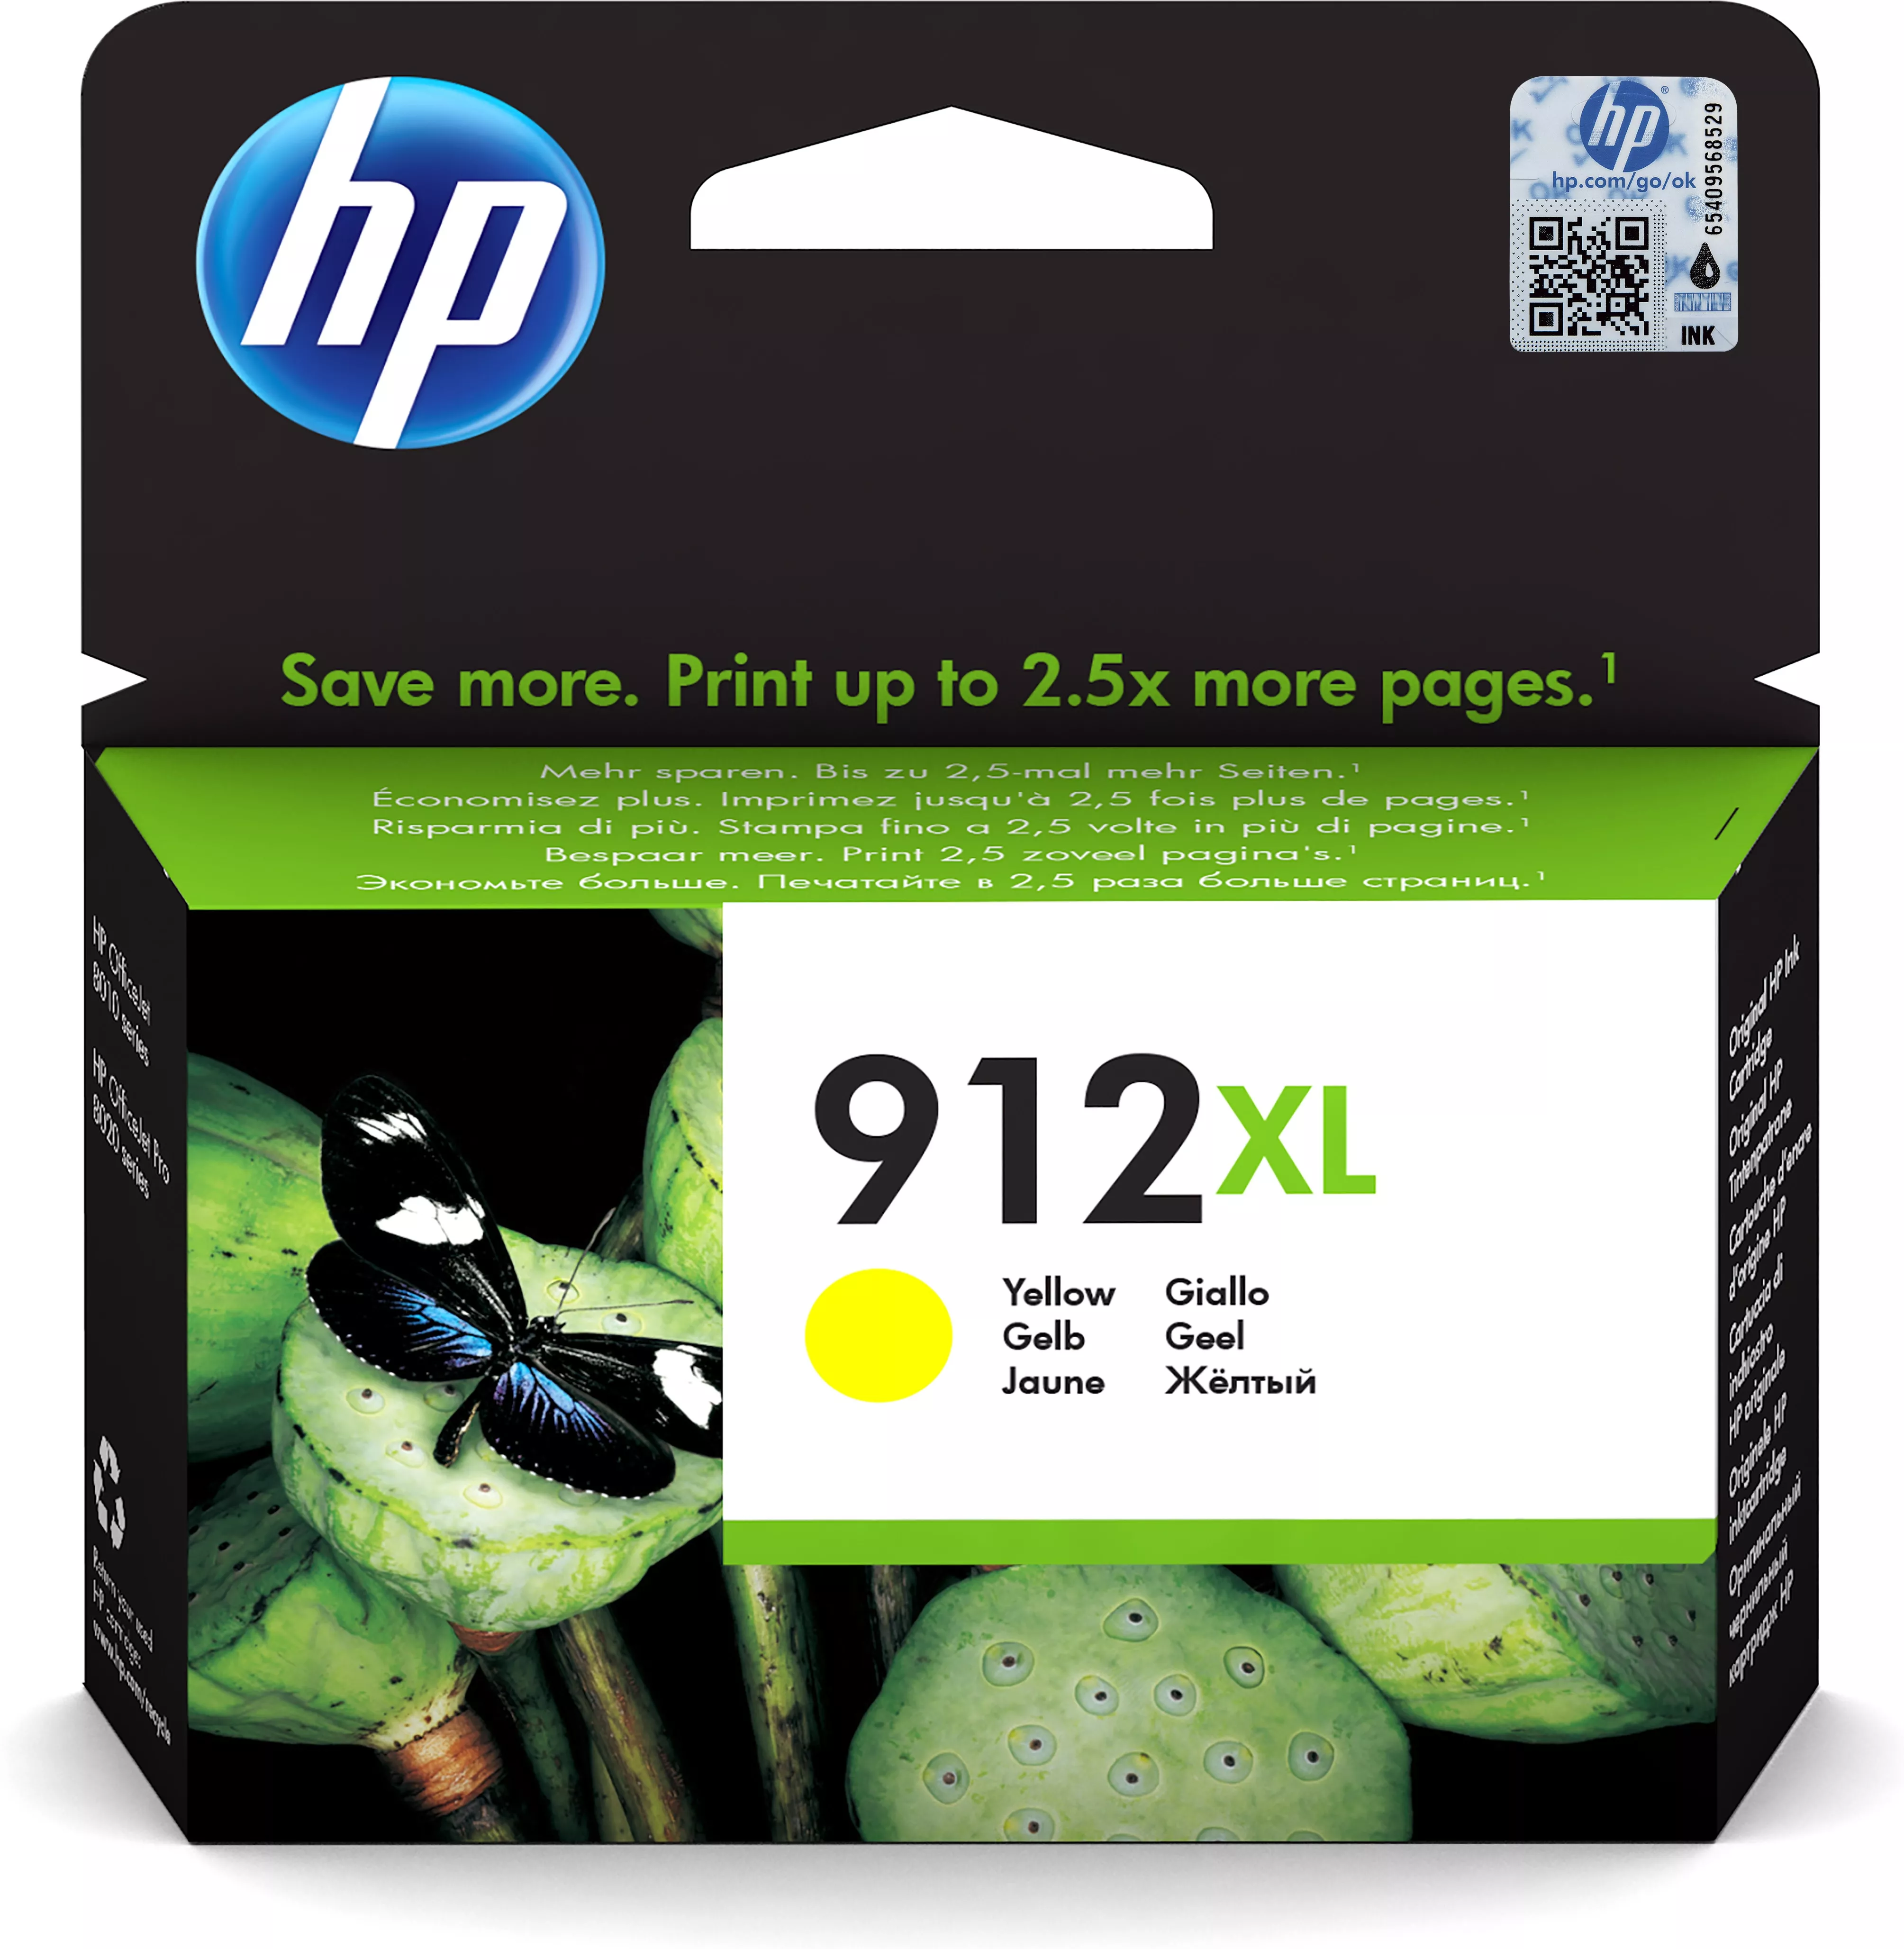 Achat HP 912XL High Yield Yellow Ink au meilleur prix